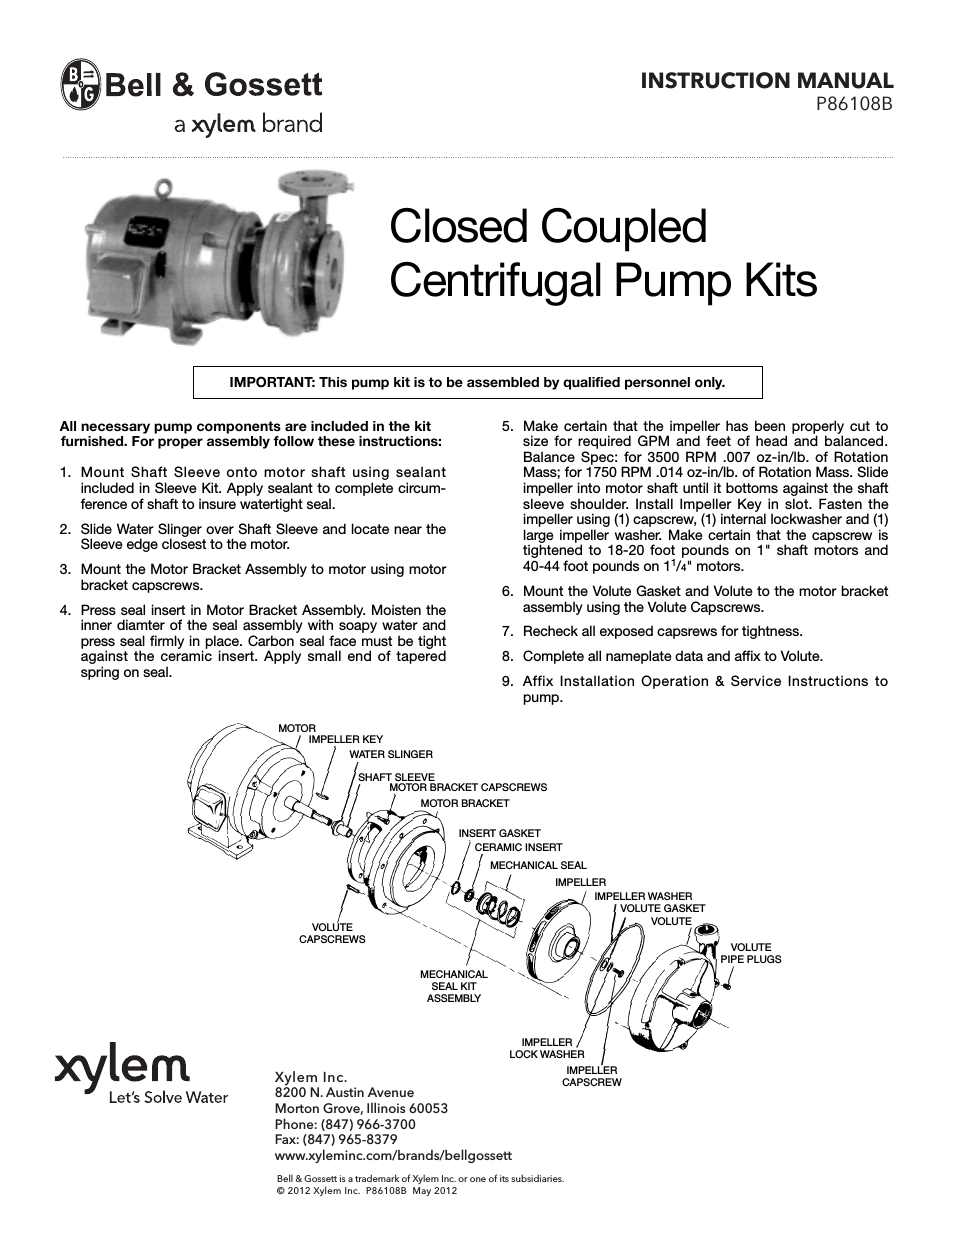 P86108B Closed Coupled Centrifugal Pump Kit